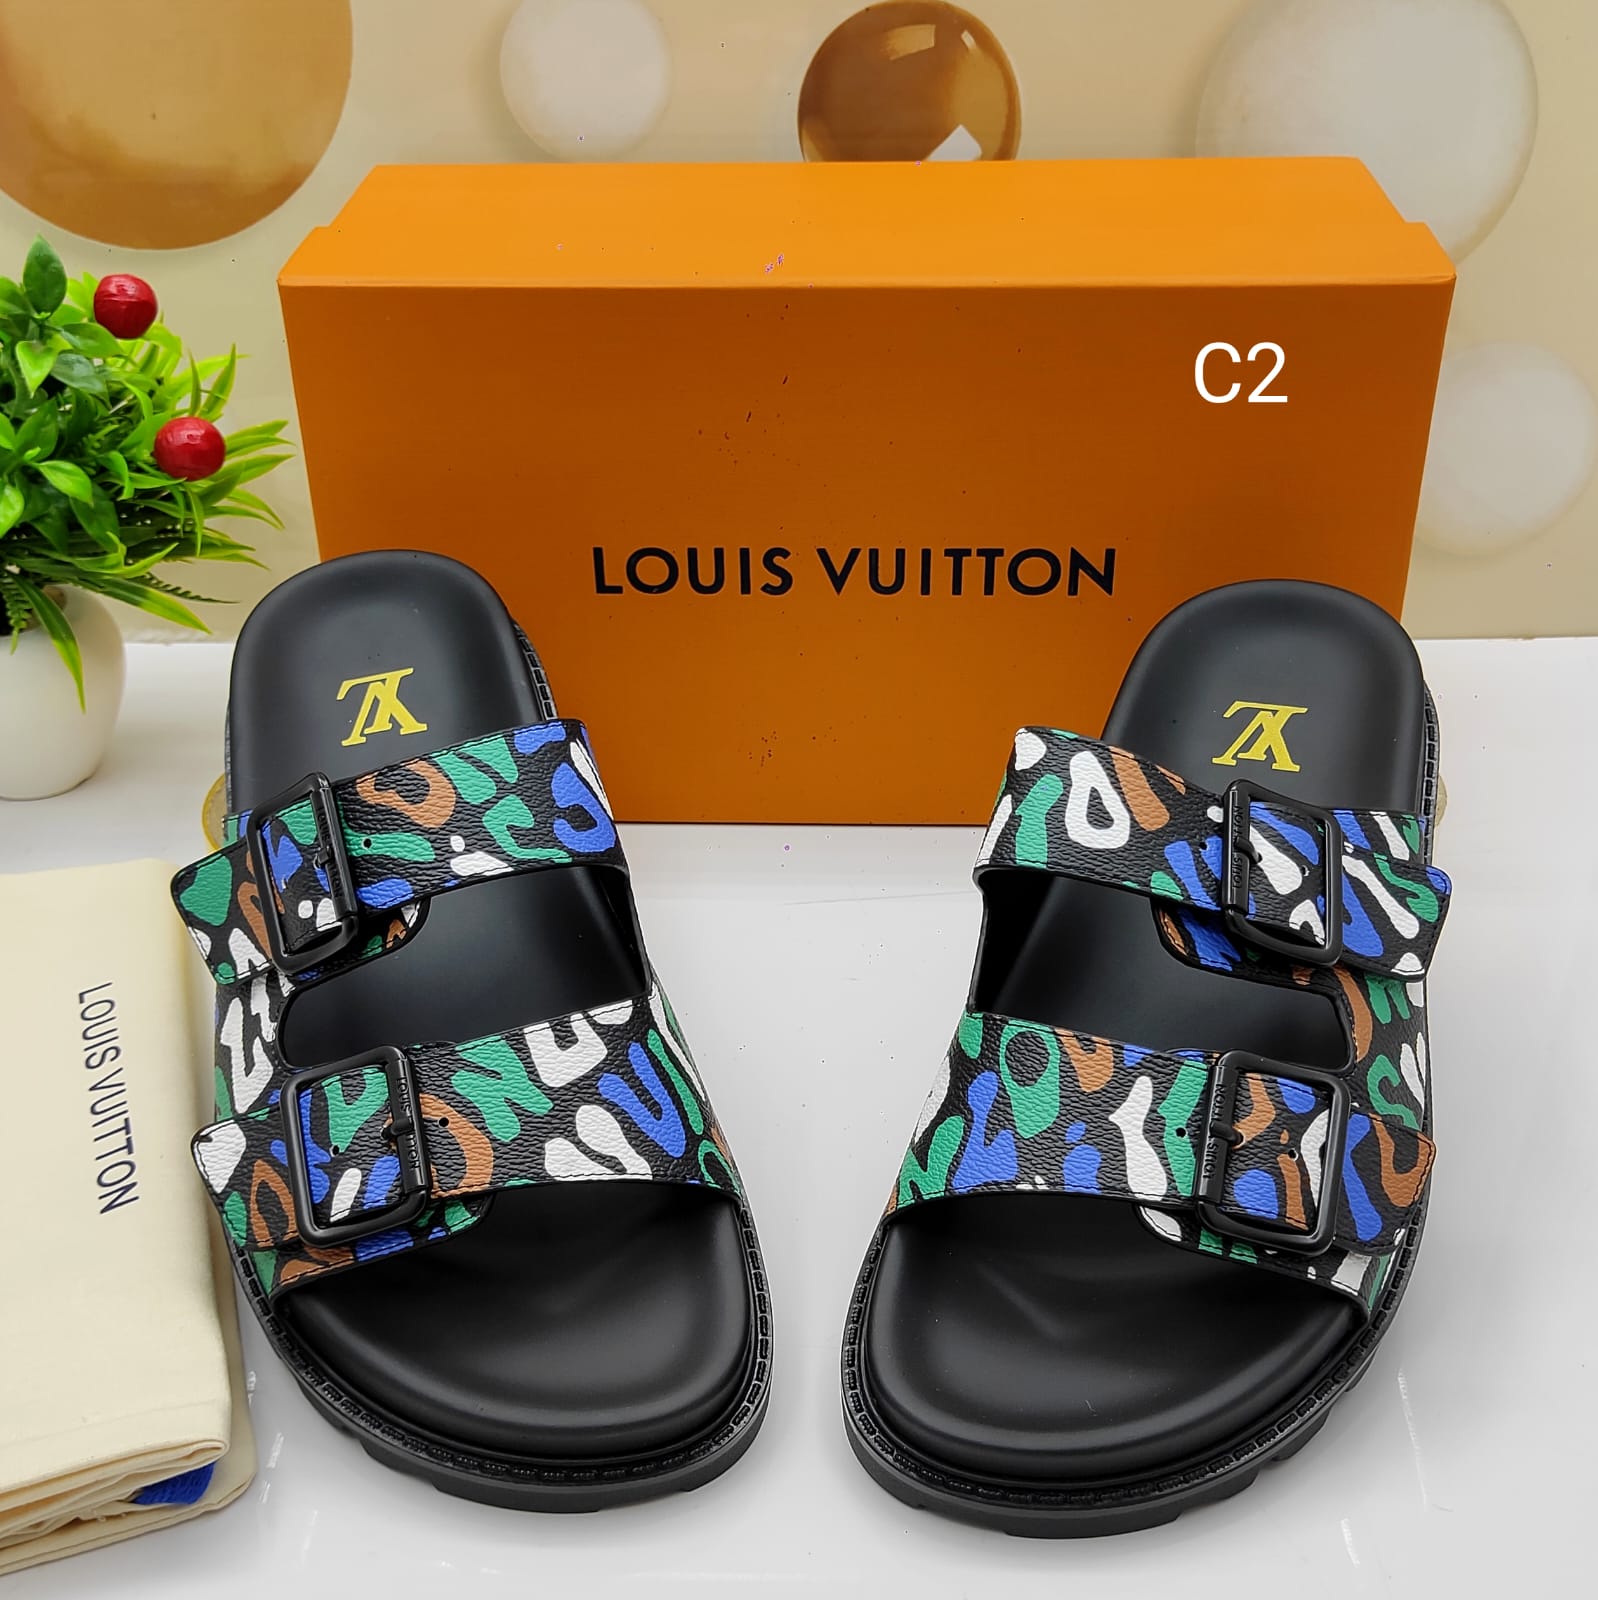 Louis vuitton designers palm slippers